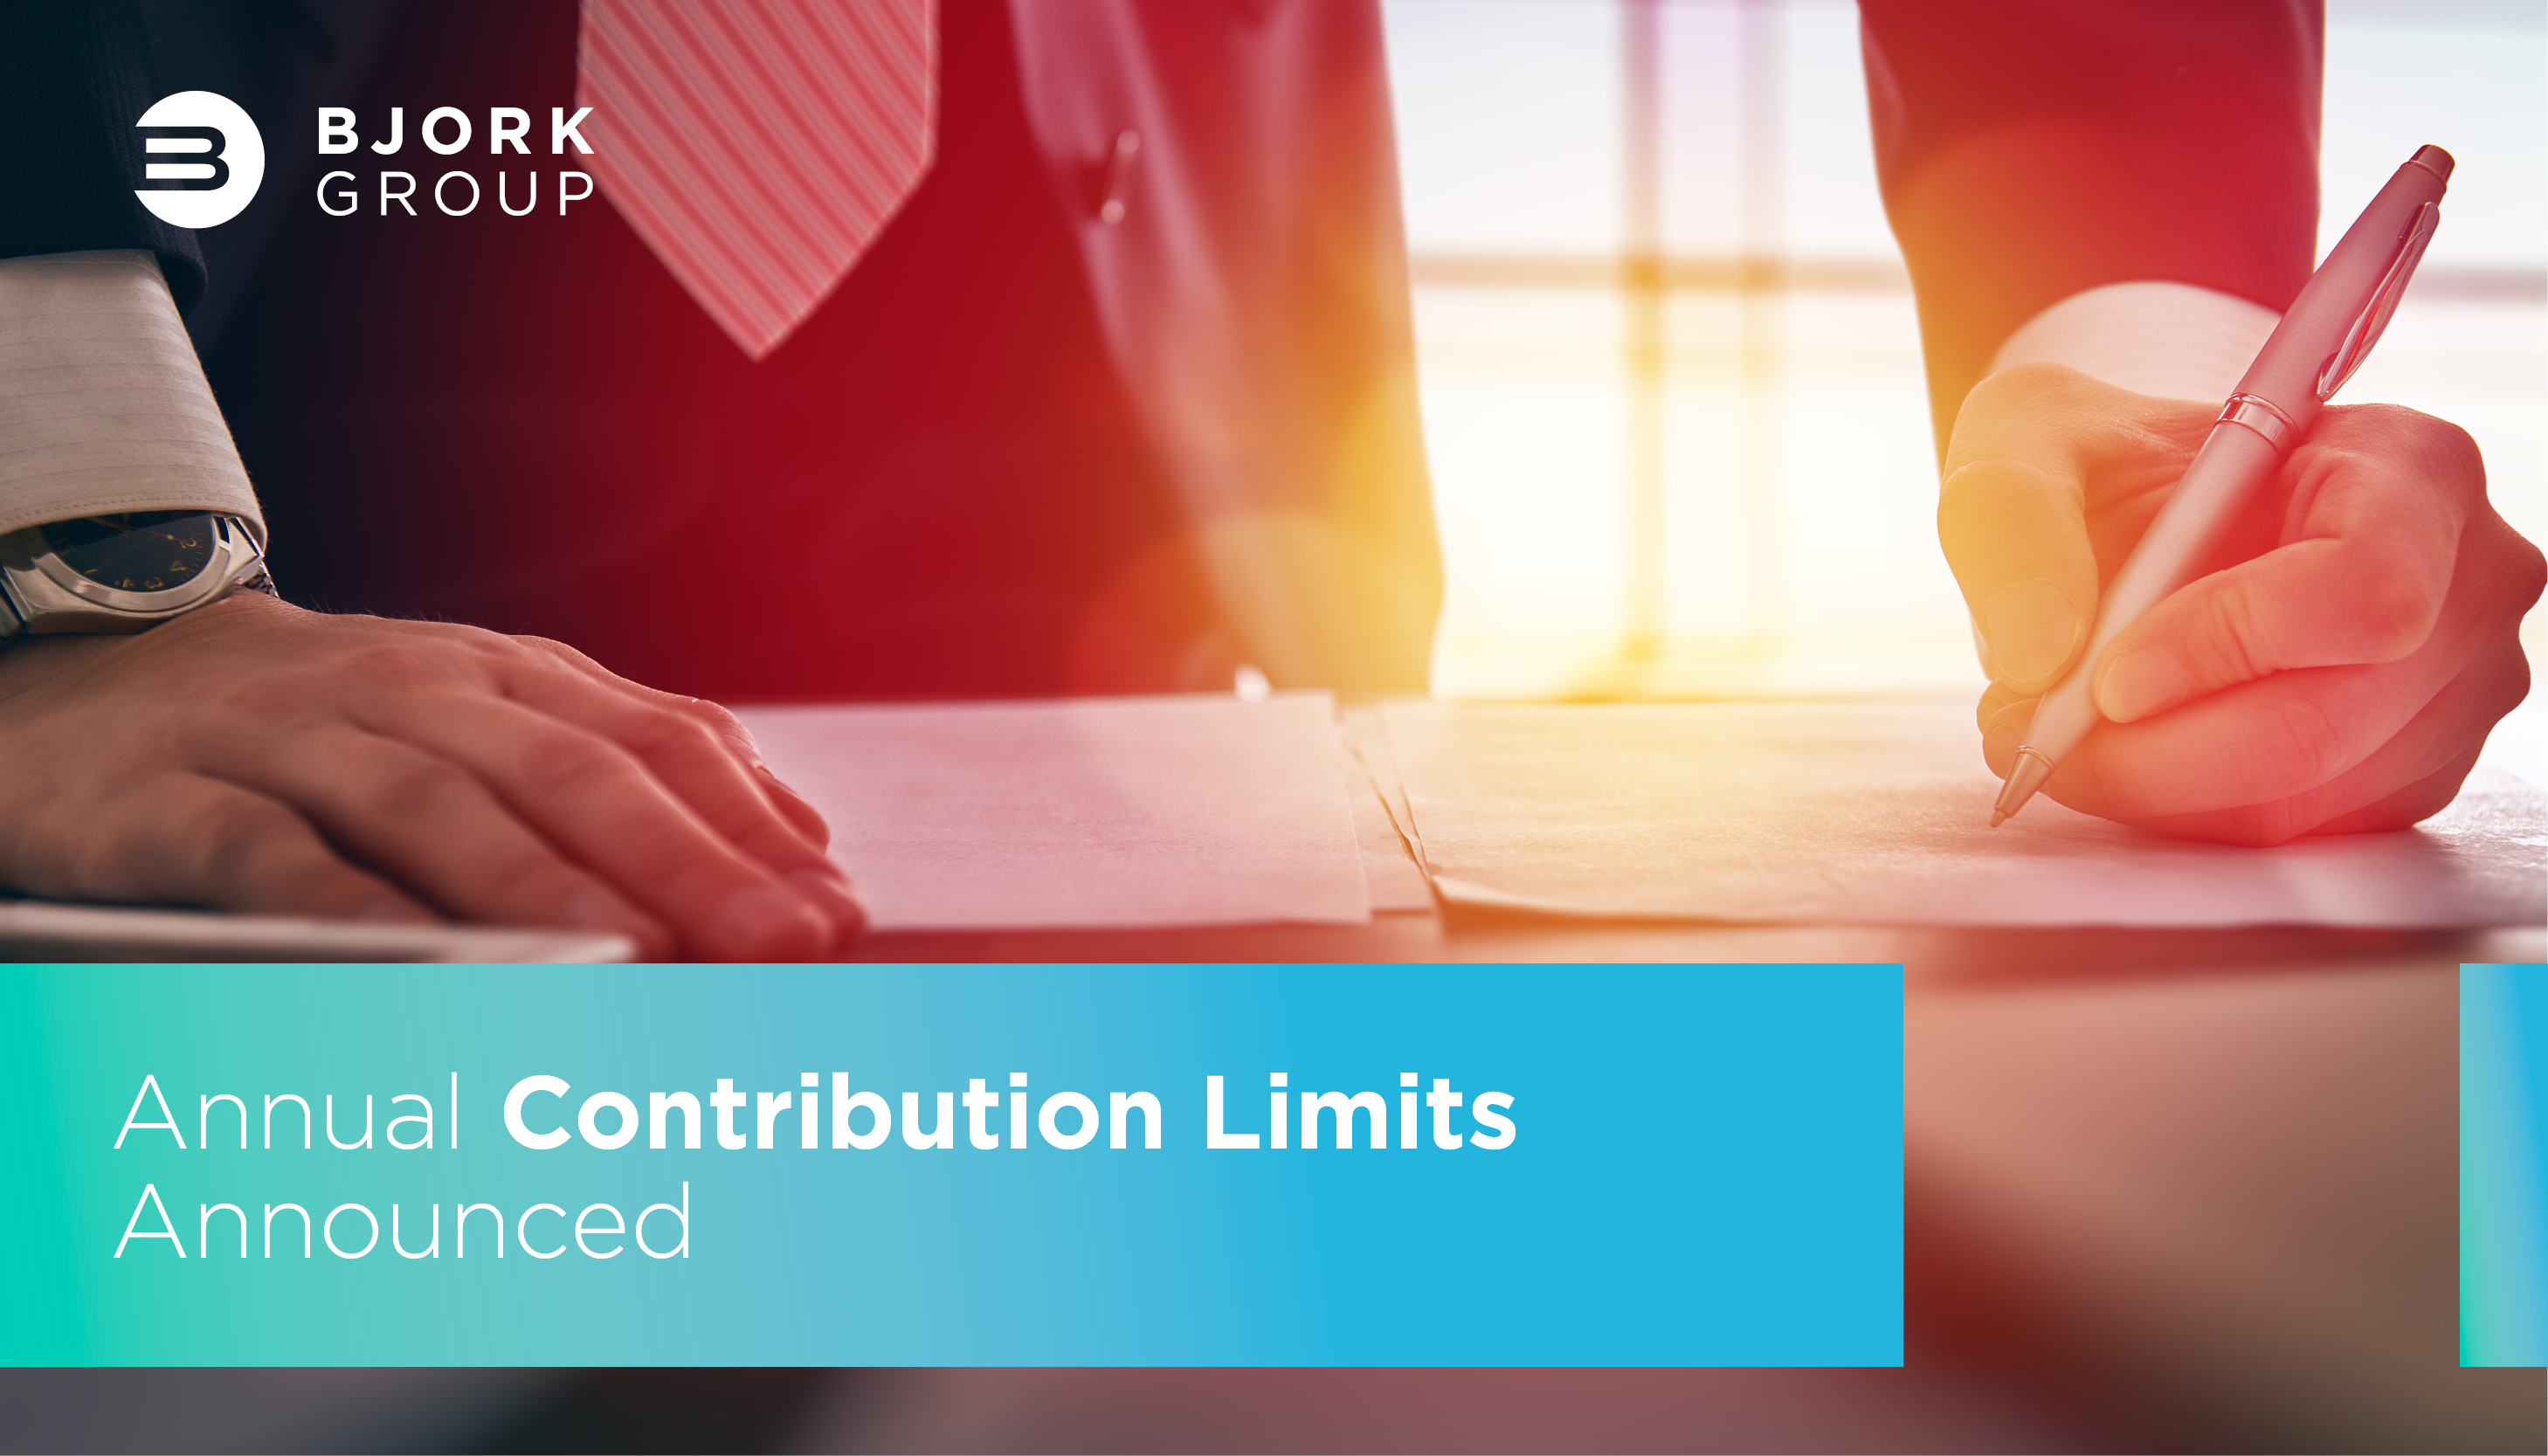 BJORK_Annual Contribution Limits_Headline Image-1